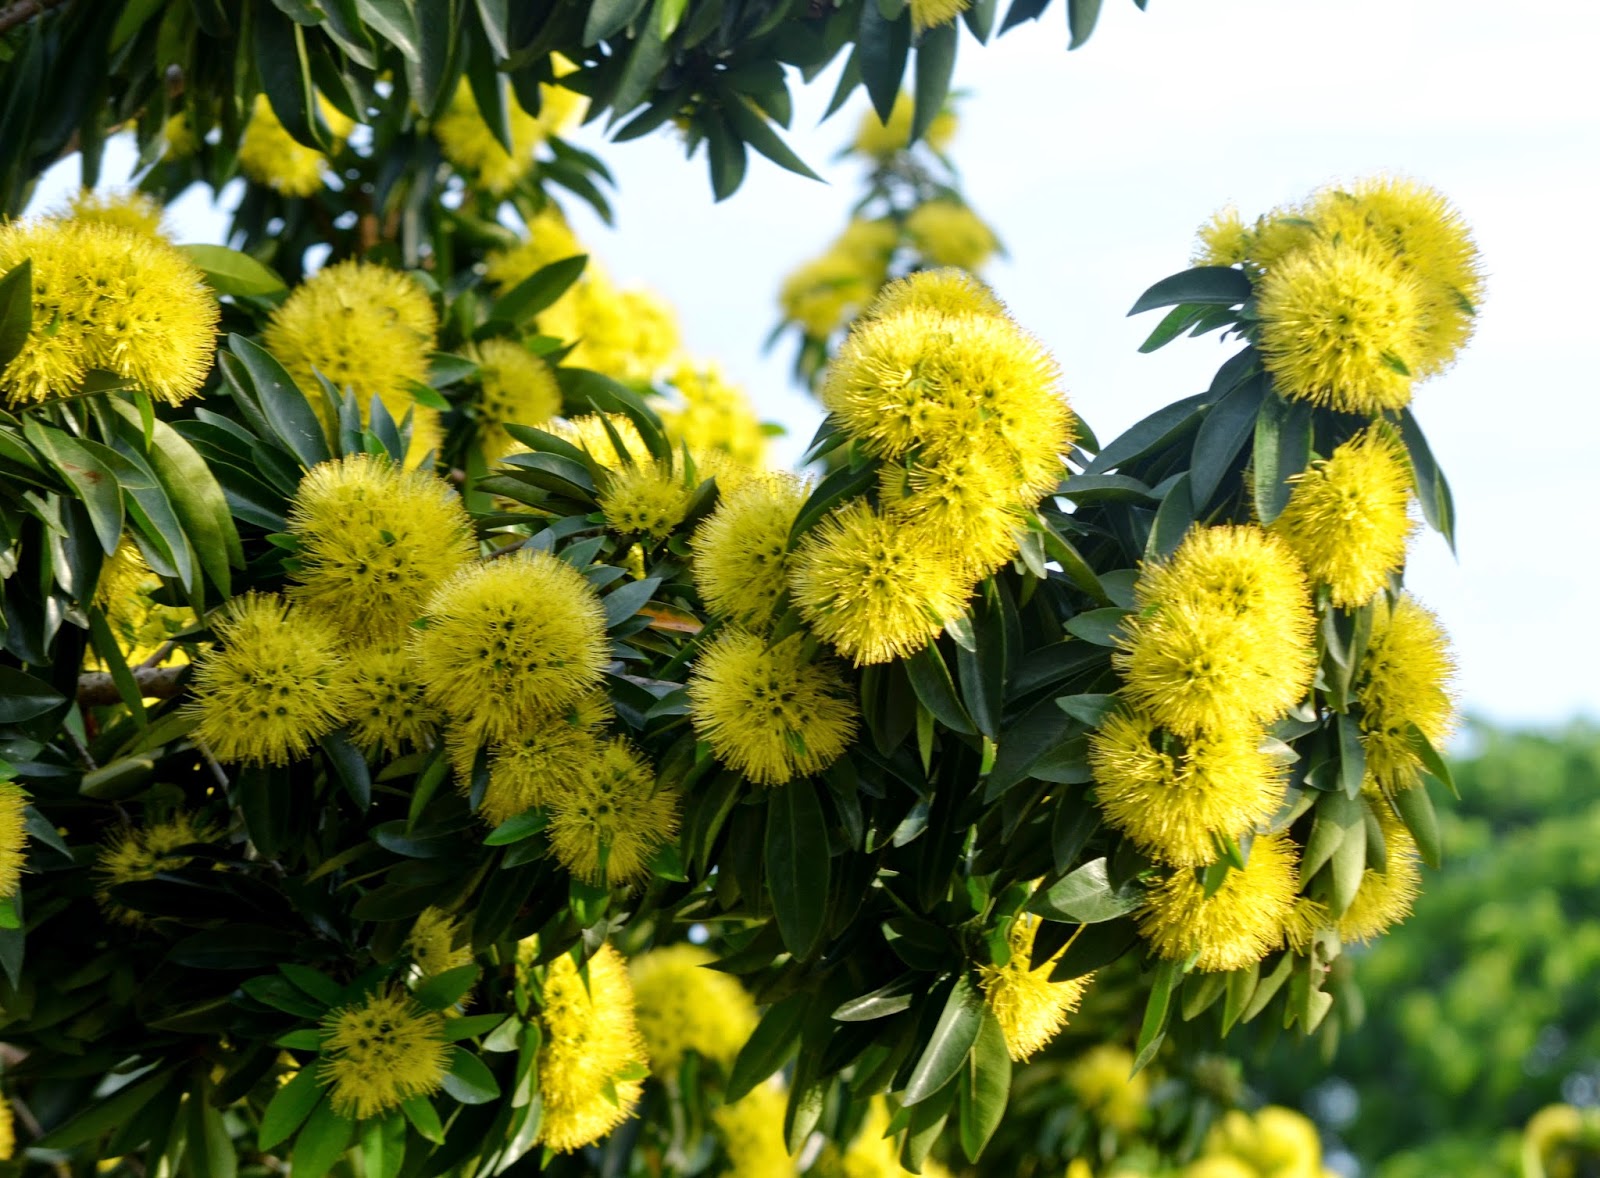 Flowers of the Golden Penda Plant